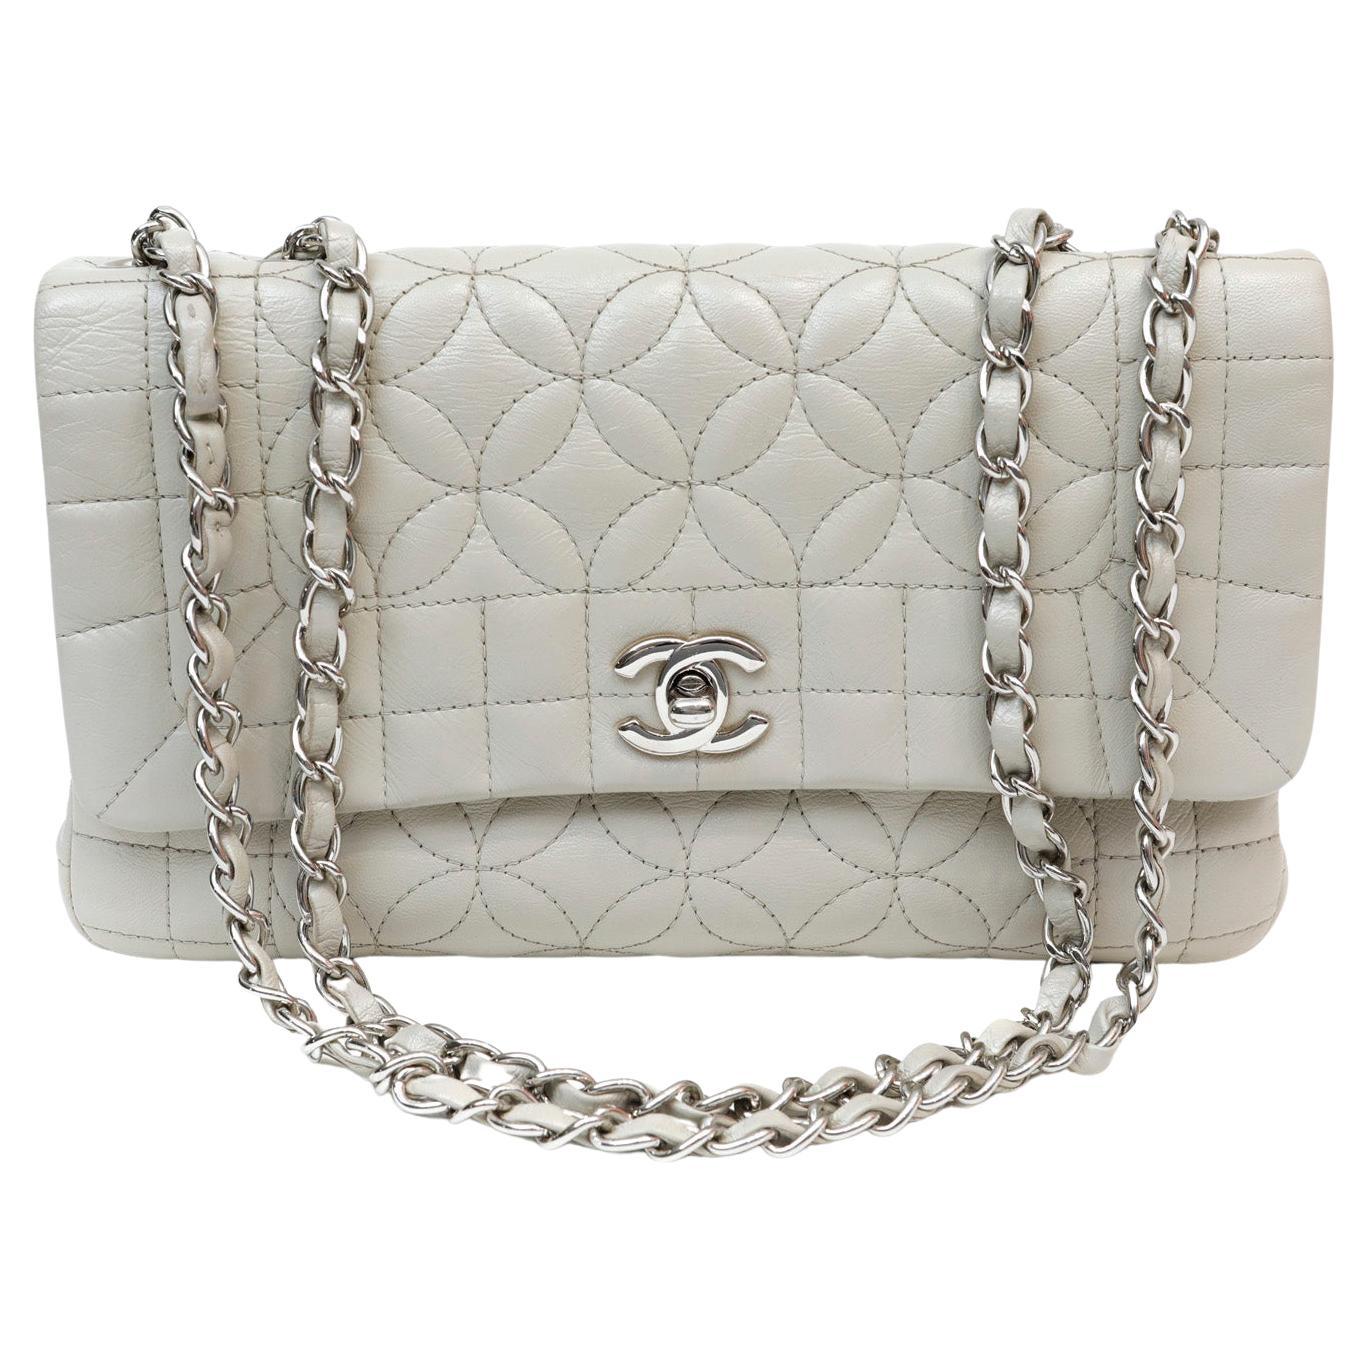 Chanel Etoupe Leather Camellia Flap Bag 